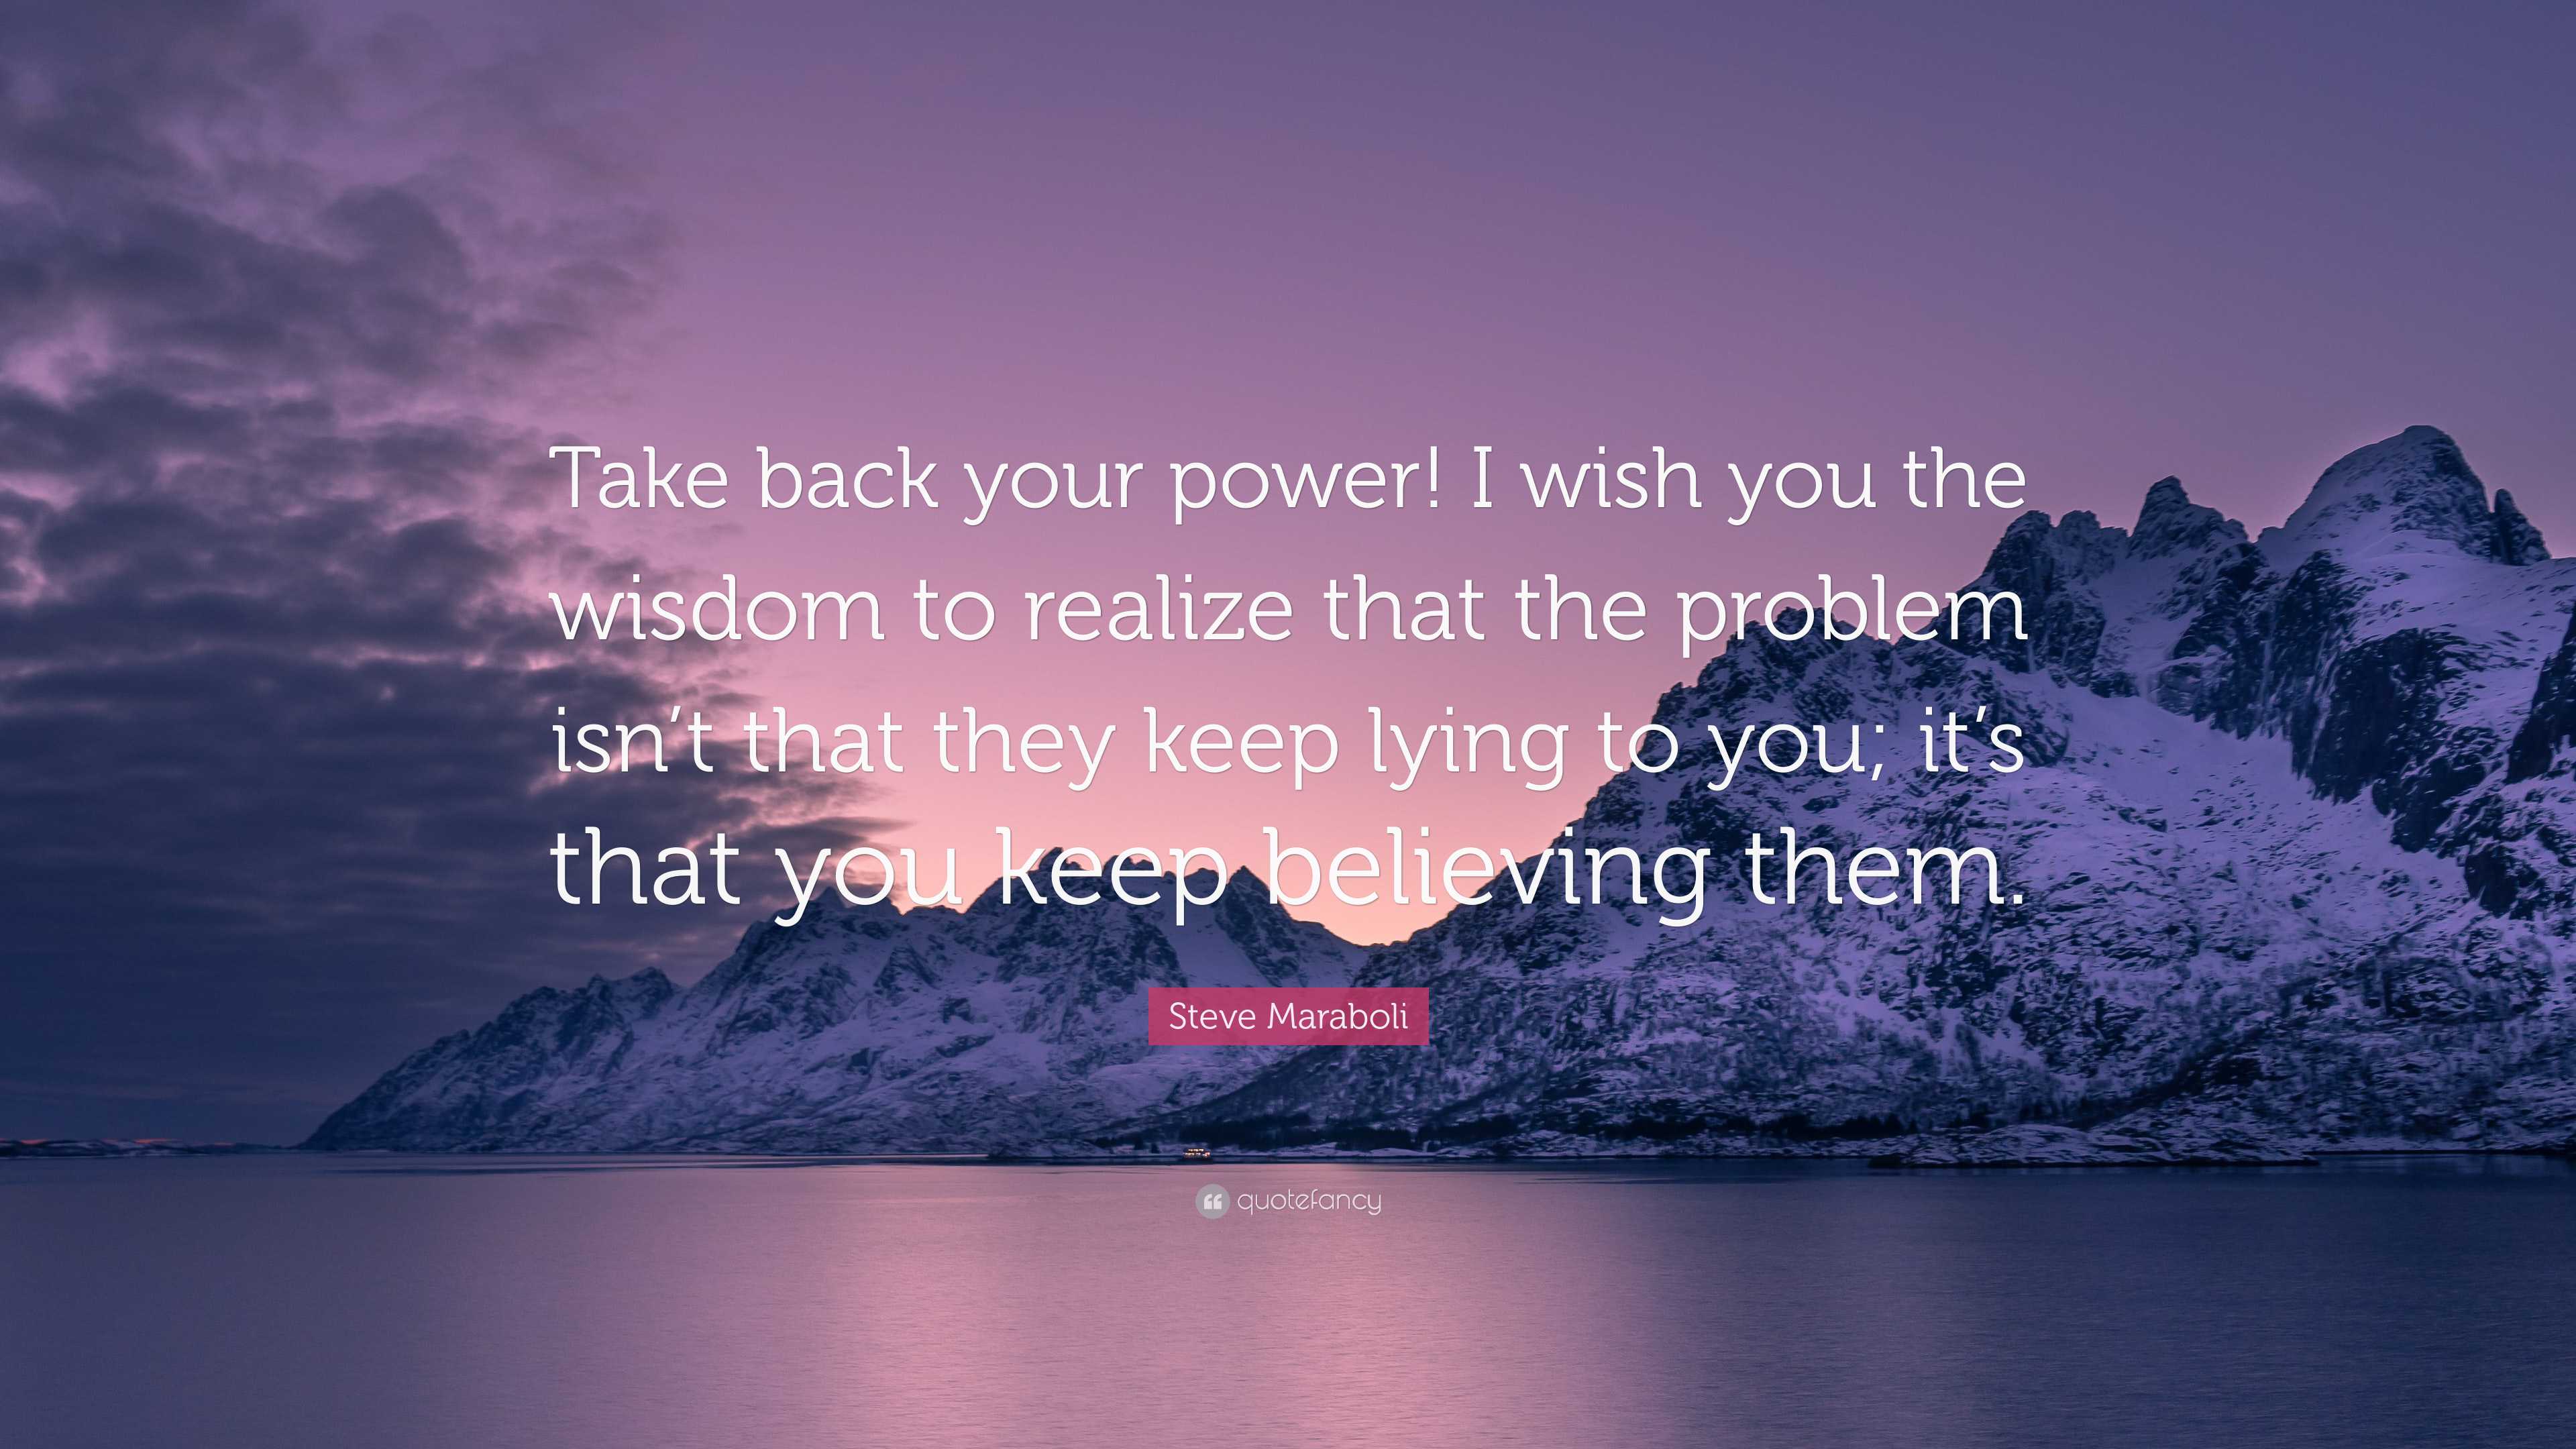 Steve Maraboli Quote: “Take back your power! I wish you the wisdom